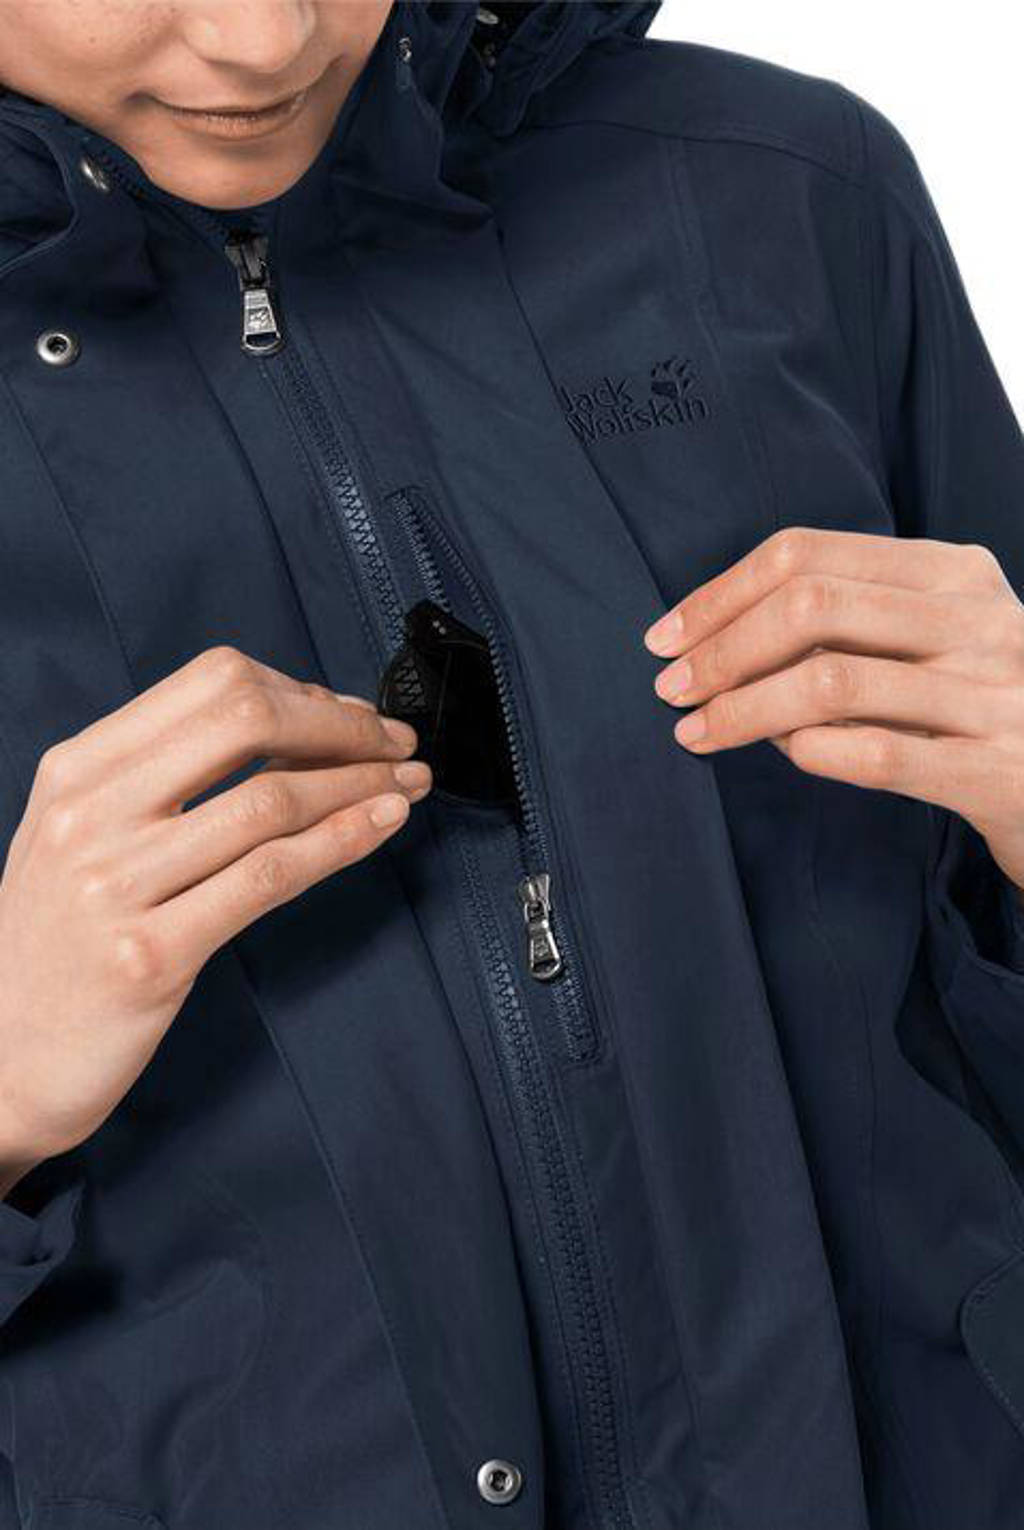 Met opzet energie Bekwaam Jack Wolfskin outdoor jas Madison Avenue donkerblauw | wehkamp